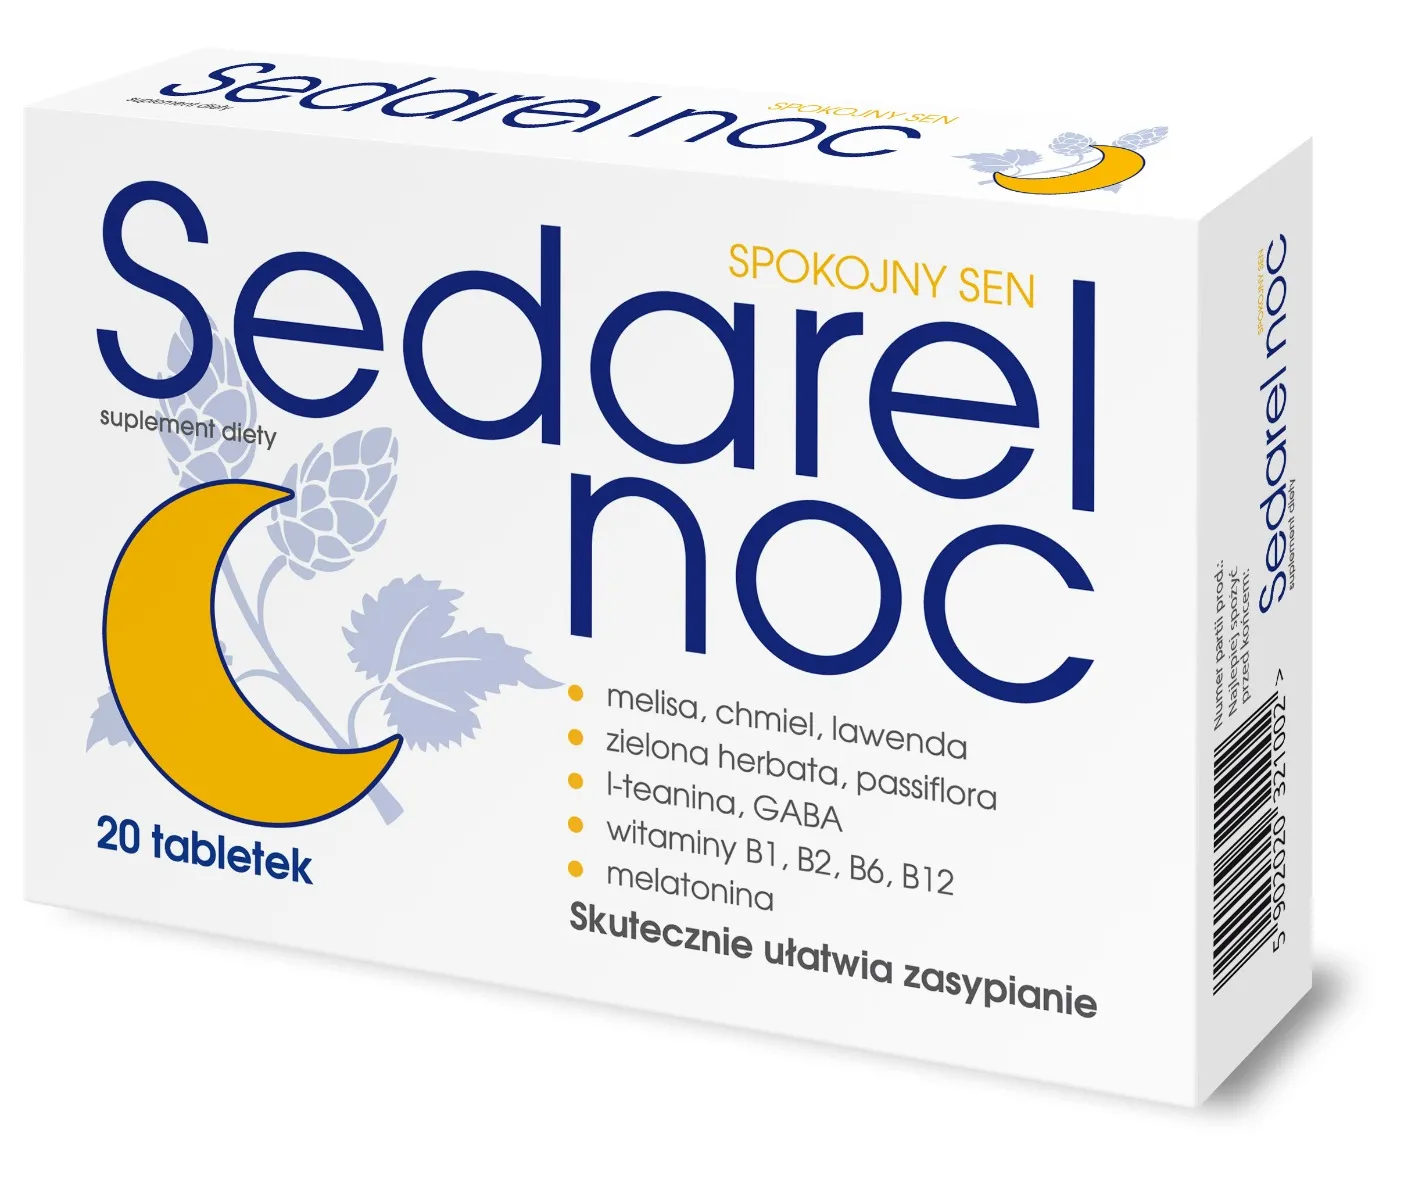 Sedarel NOC, 20 tabletek